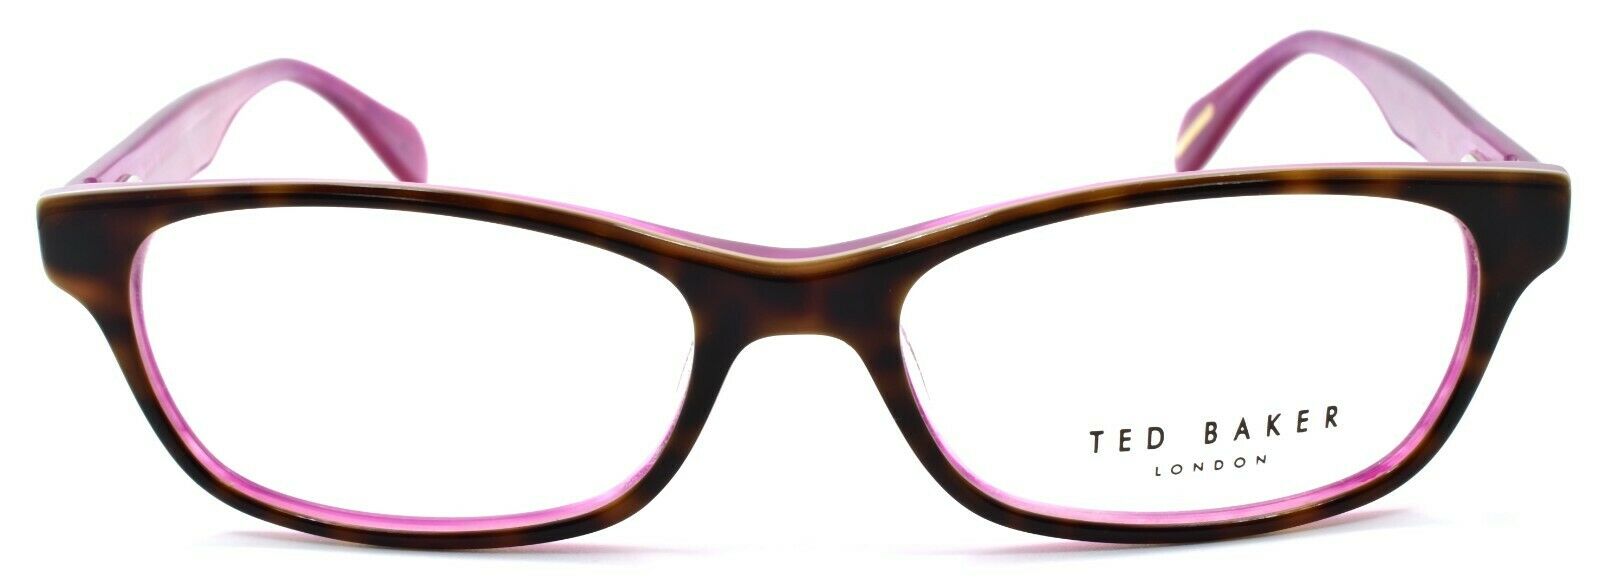 2-Ted Baker Kaya 9070 103 Women's Eyeglasses Frames 52-16-135 Tortoise / Purple-4894327044665-IKSpecs